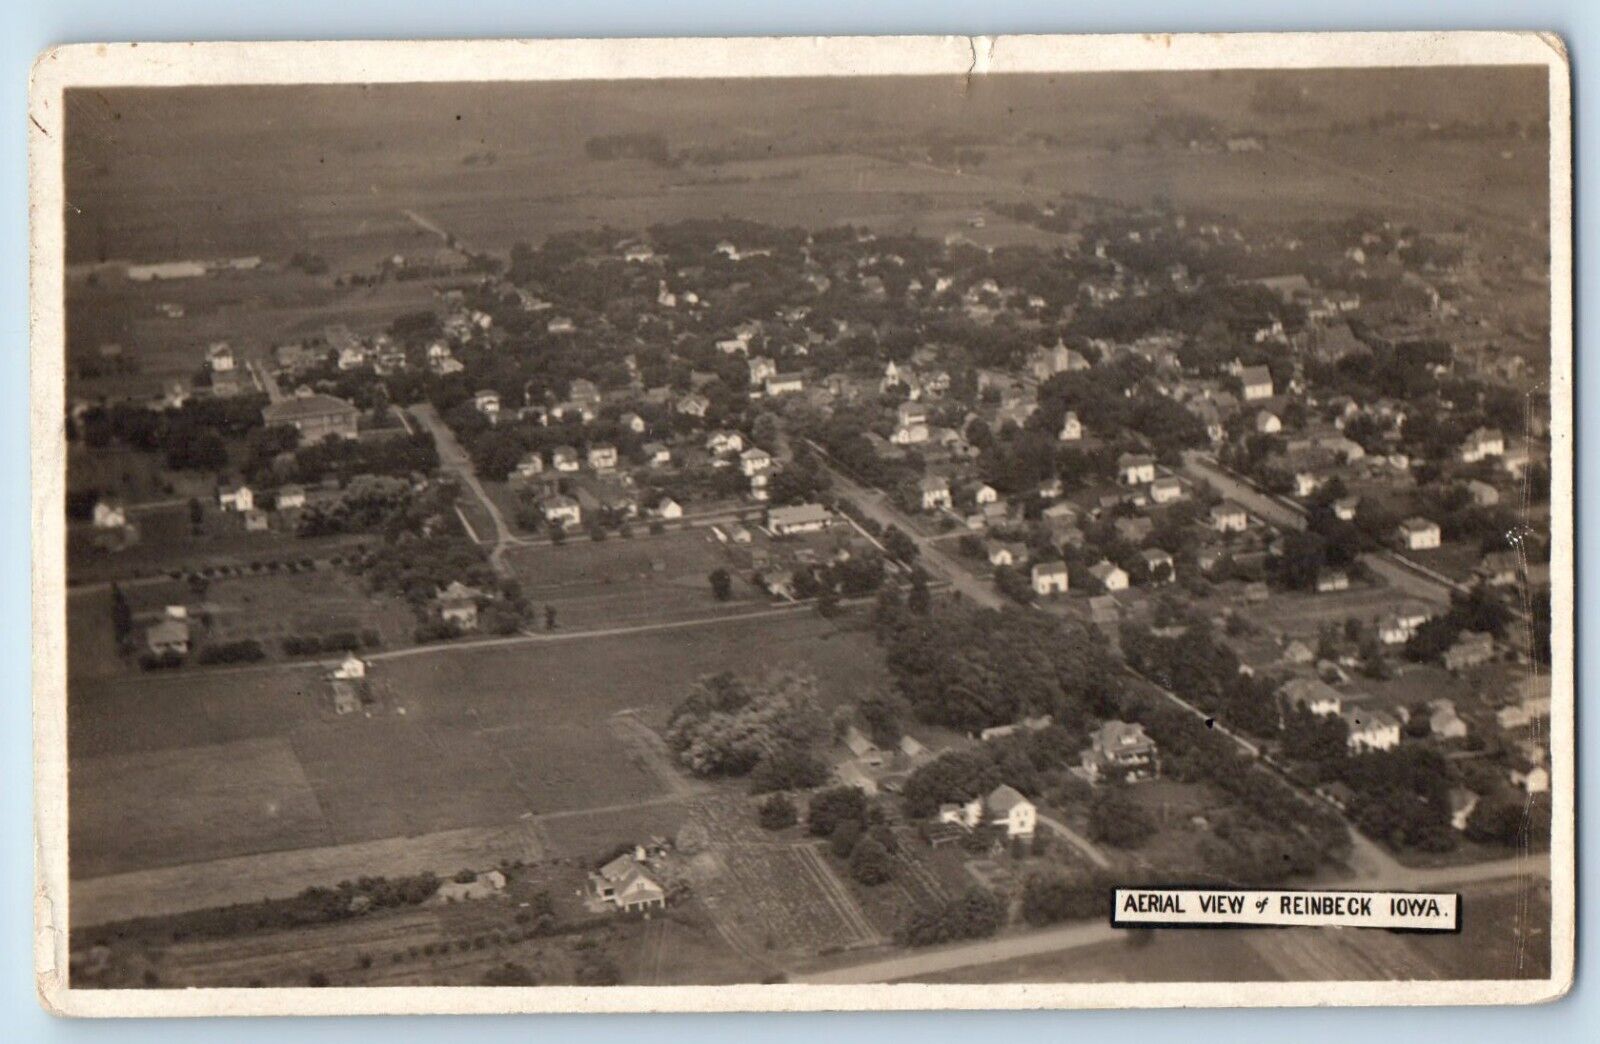 Reinbeck Iowa IA Postcard RPPC Photo Aerial View c1910's Antique Posted